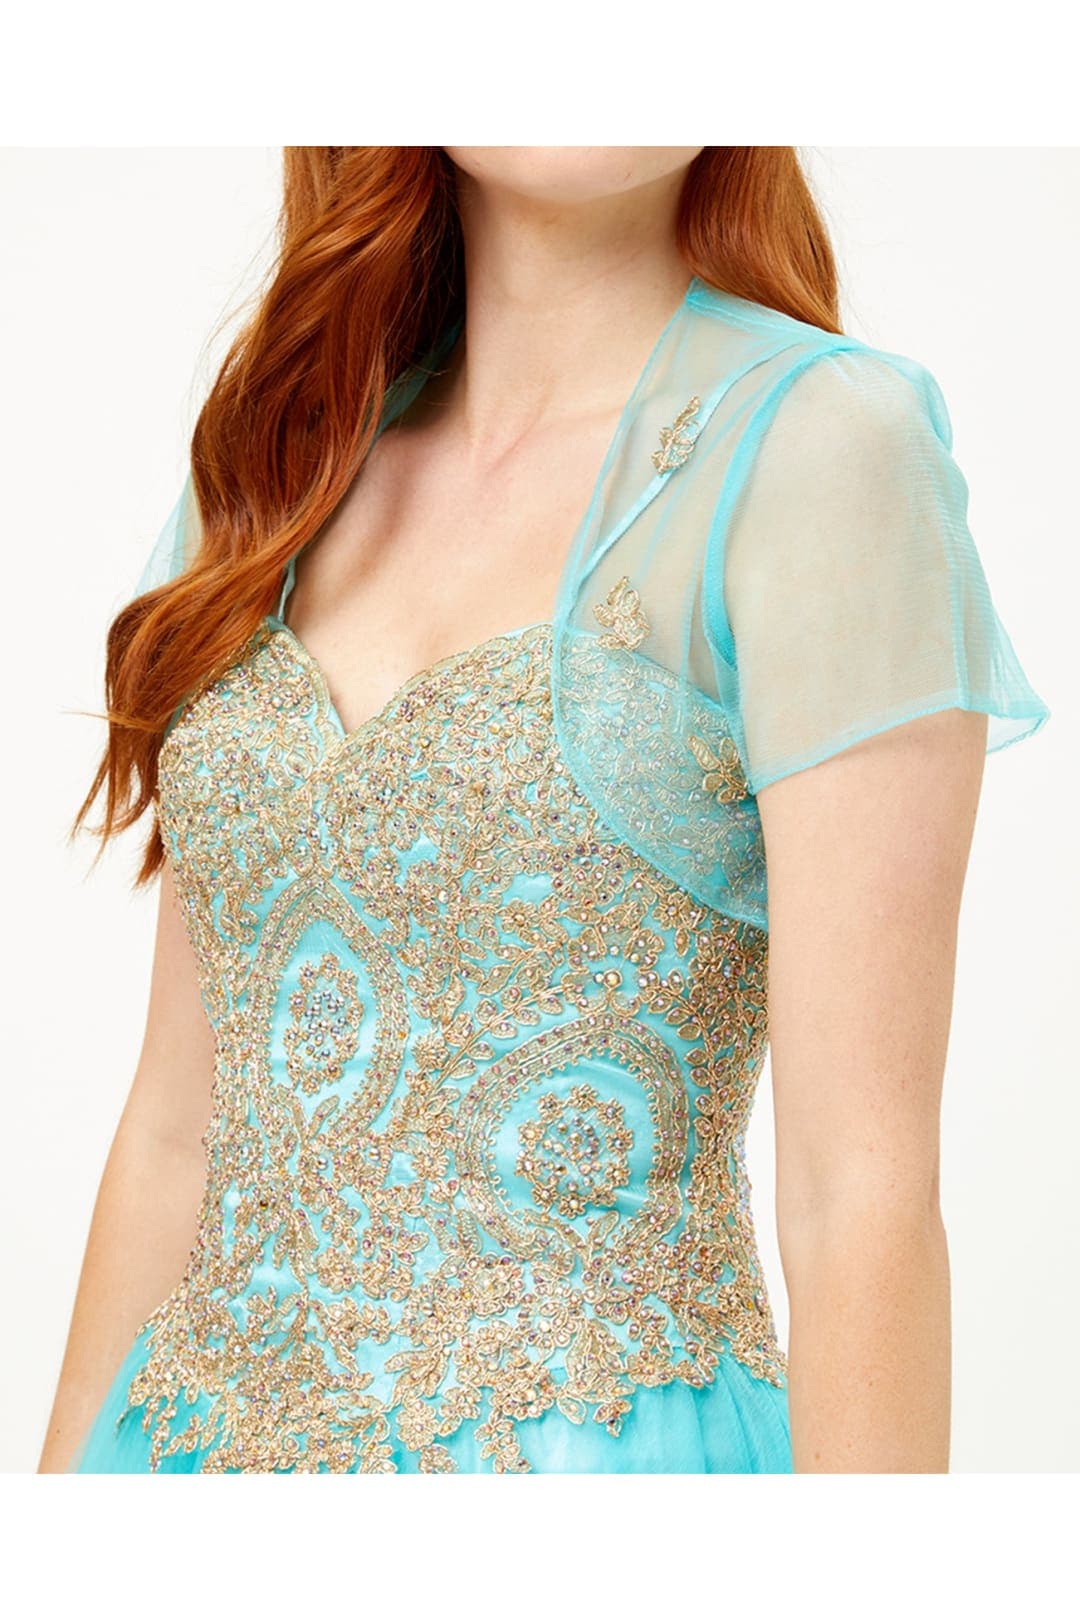 Layla K LK74 Strapless Embroidered Sweet 16 Quinceanera Ball Dress - AQUA / 4 - Dress